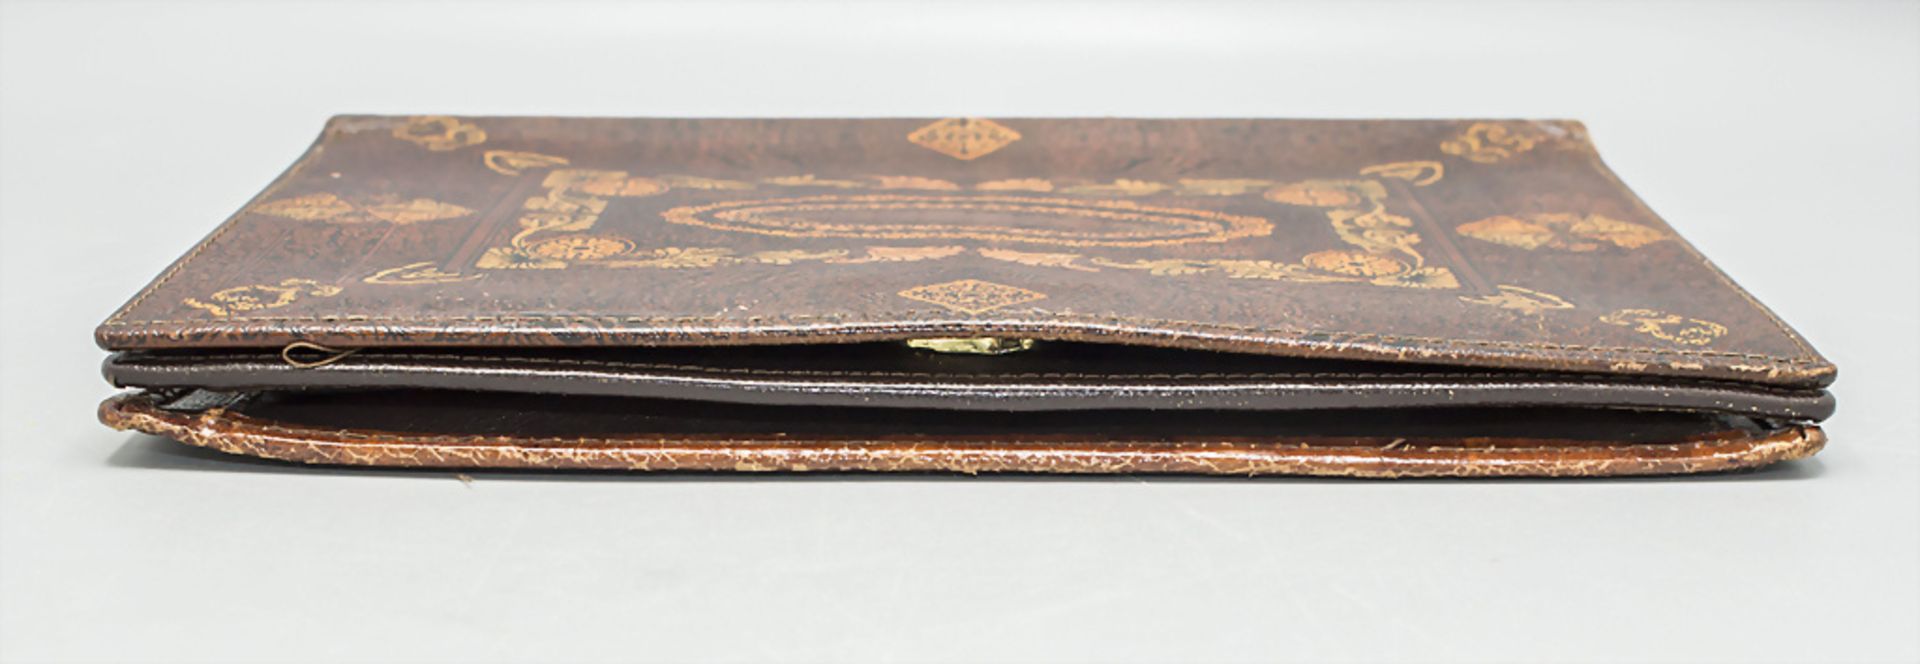 Gemusterte Lederhandtasche / A patterned leather handbag, wohl Italien - Bild 5 aus 5